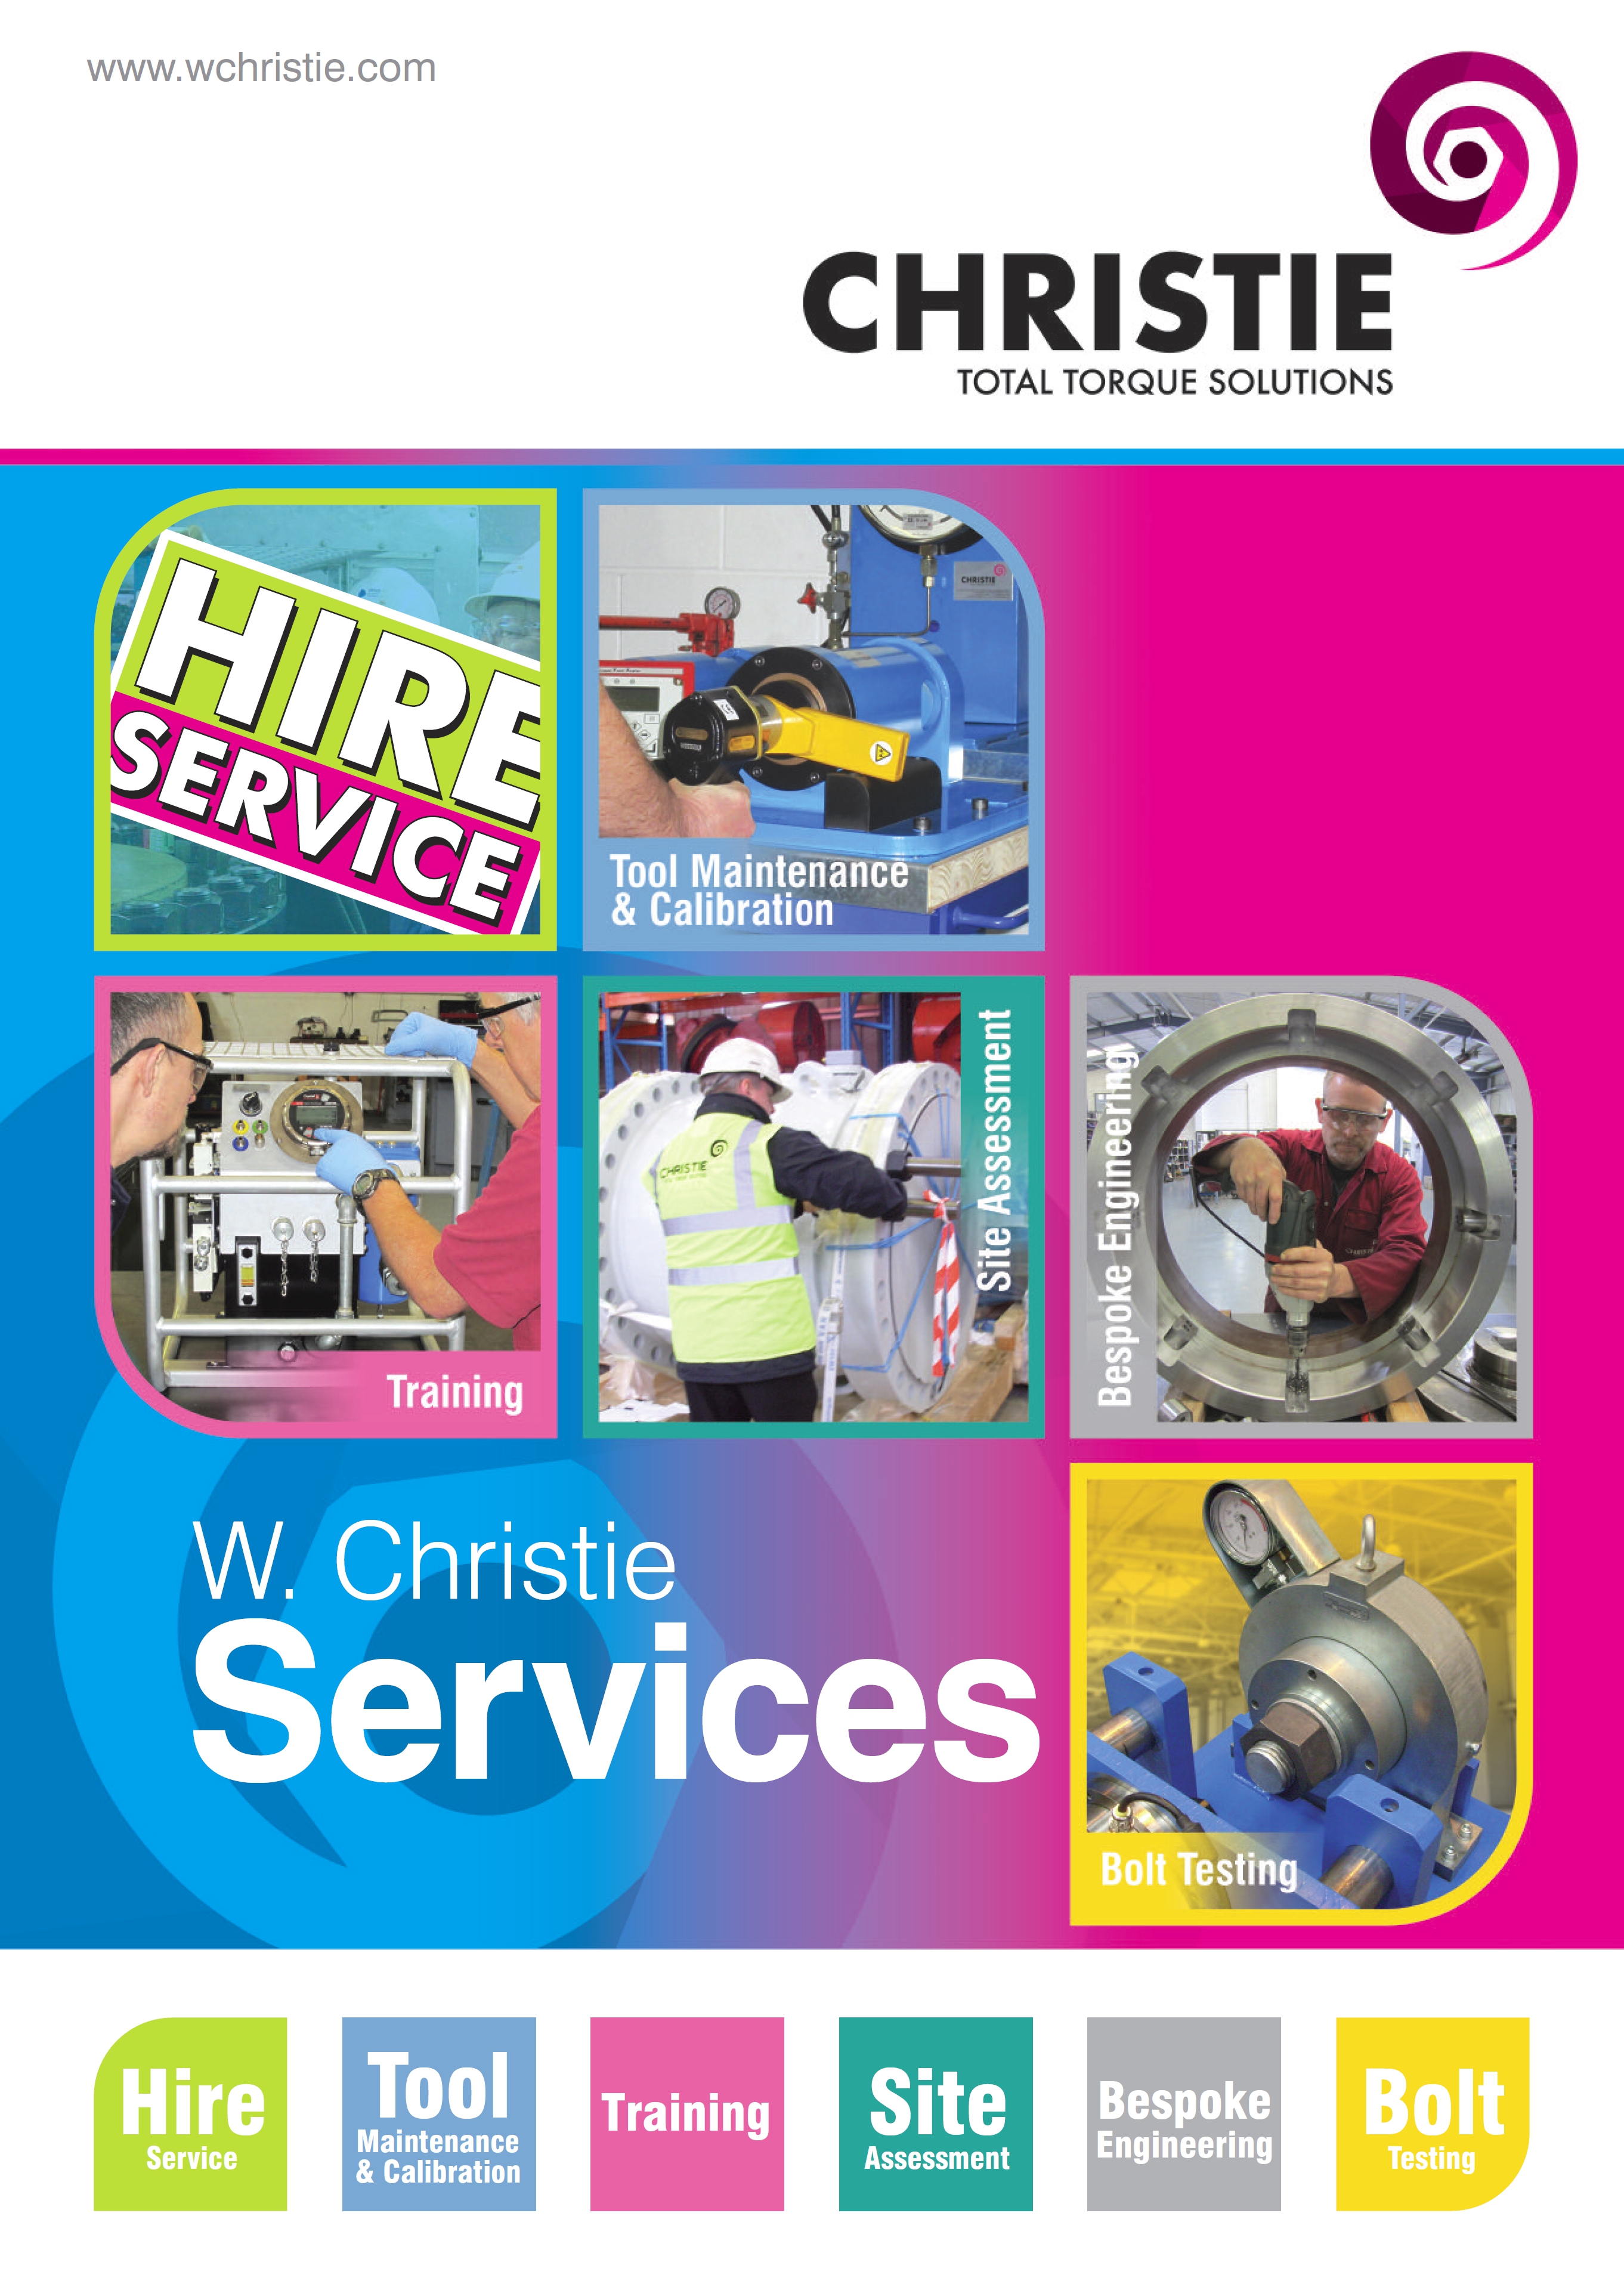 W. Christie Services